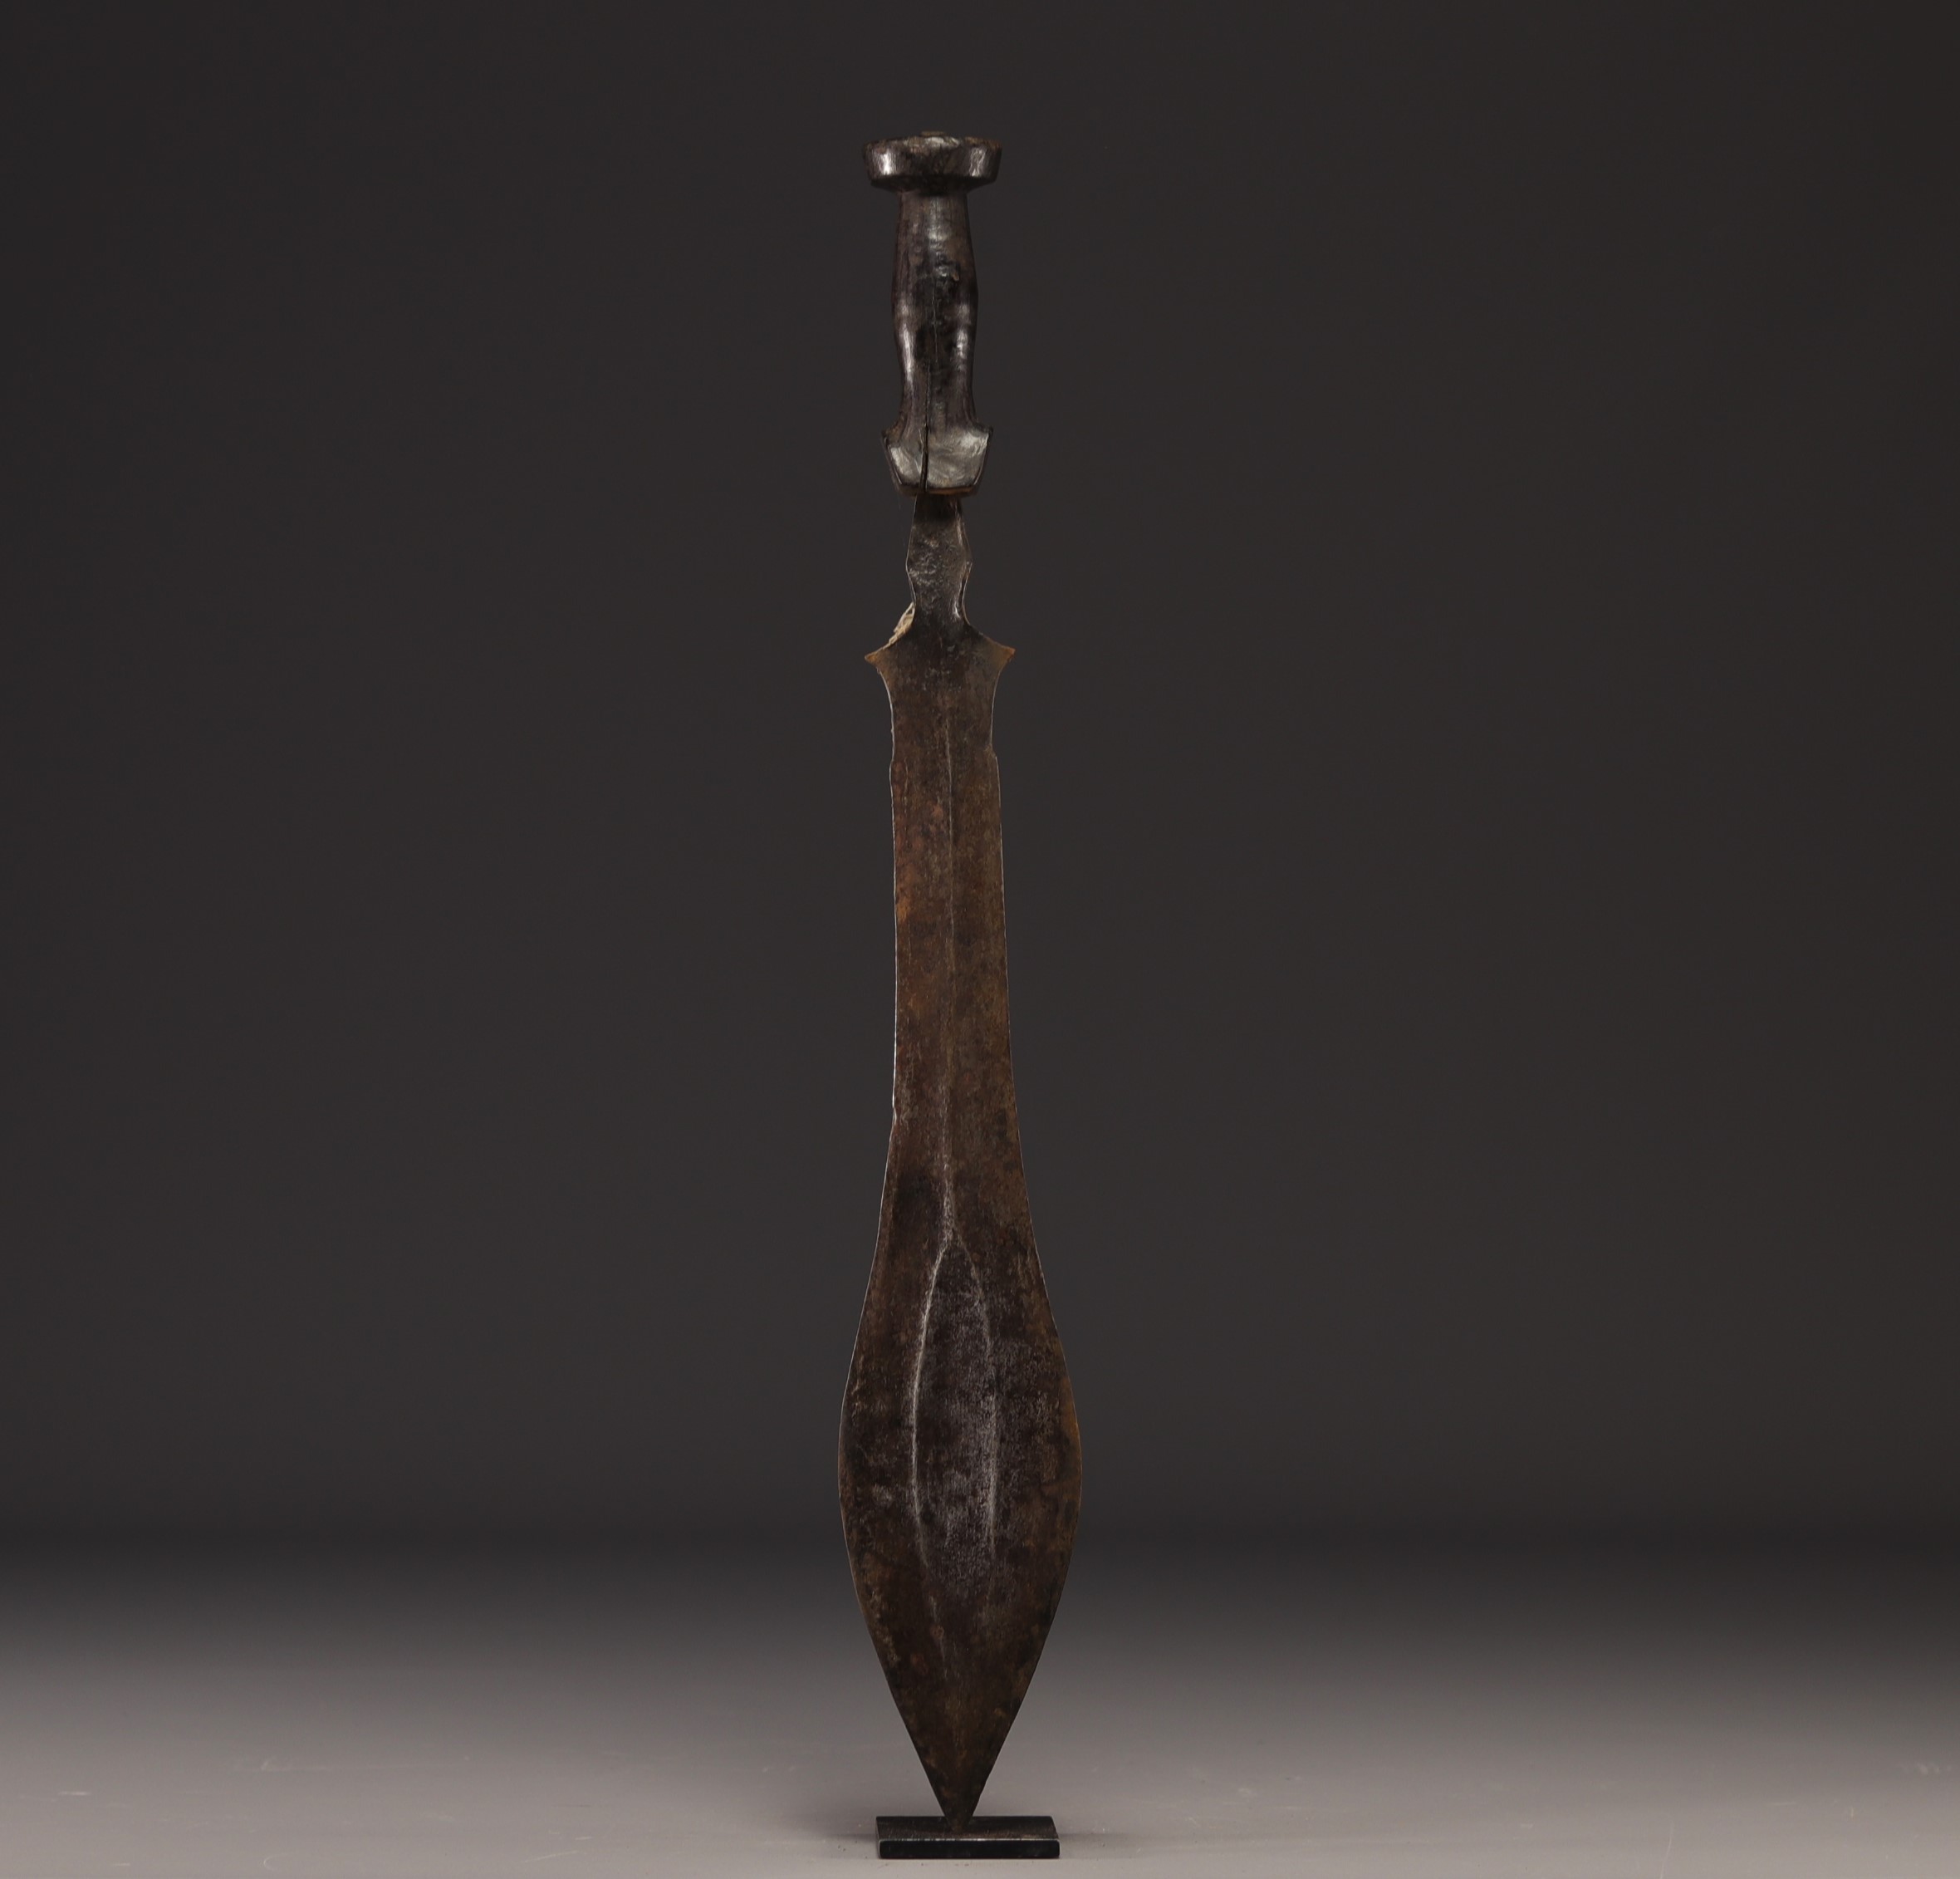 Luba knife and sheath - Rep.Dem.Congo - Image 3 of 3